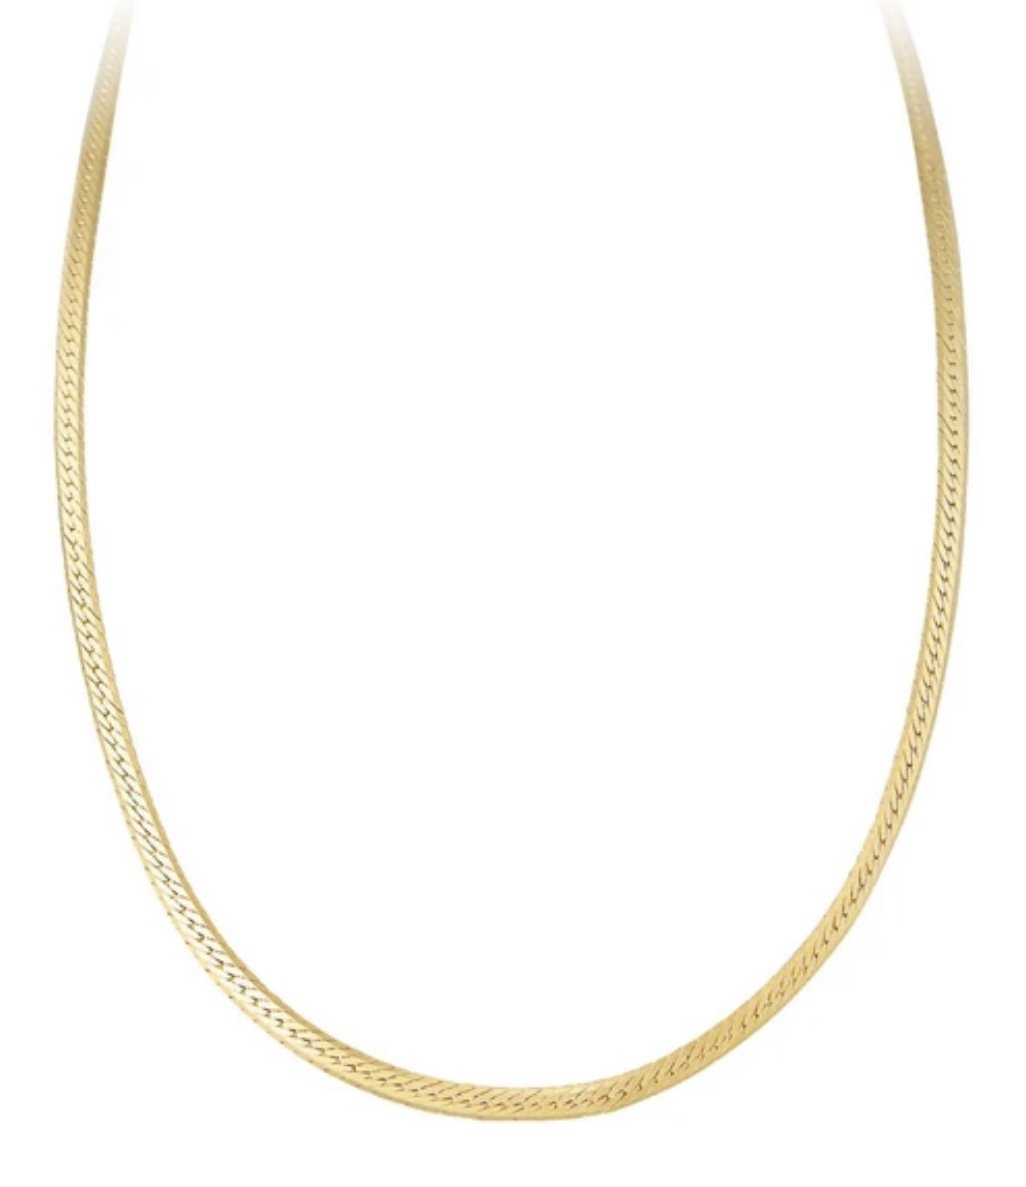 Fairley Gold Herringbone Necklace